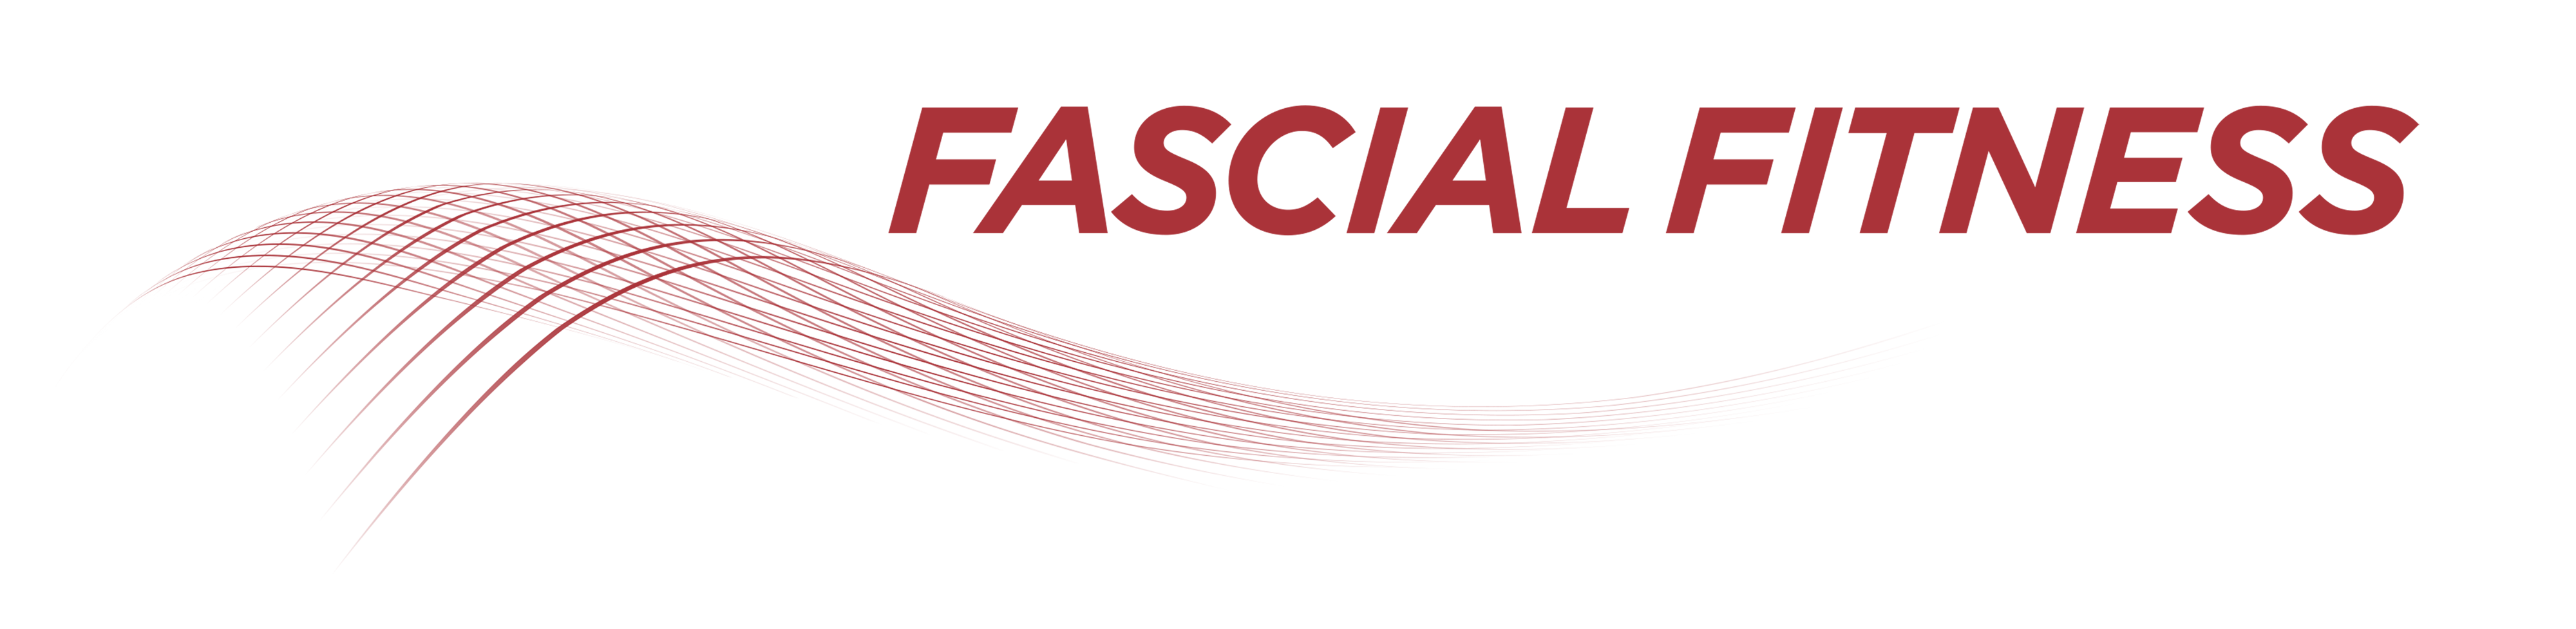 Fascial-Fitness-Association